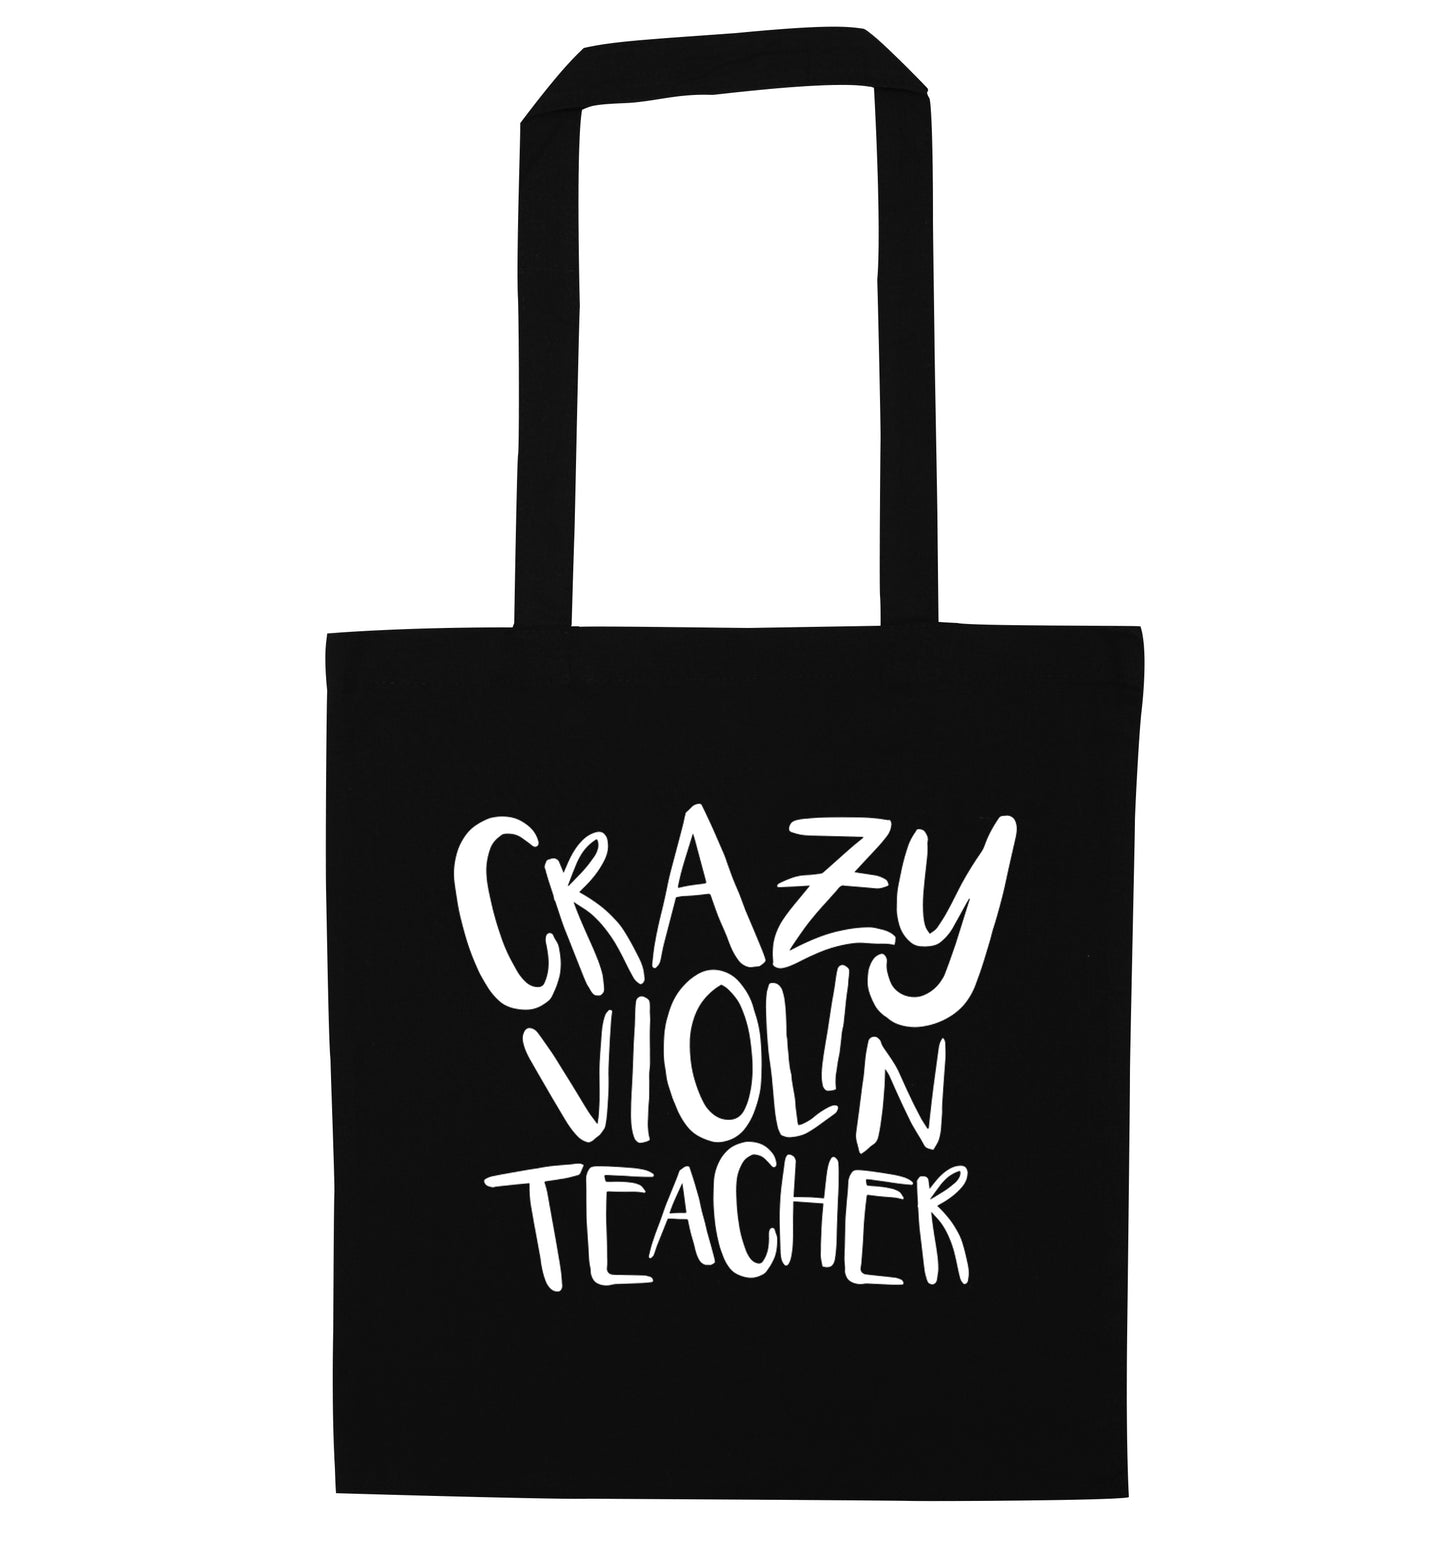 Crazy violin teacher black tote bag